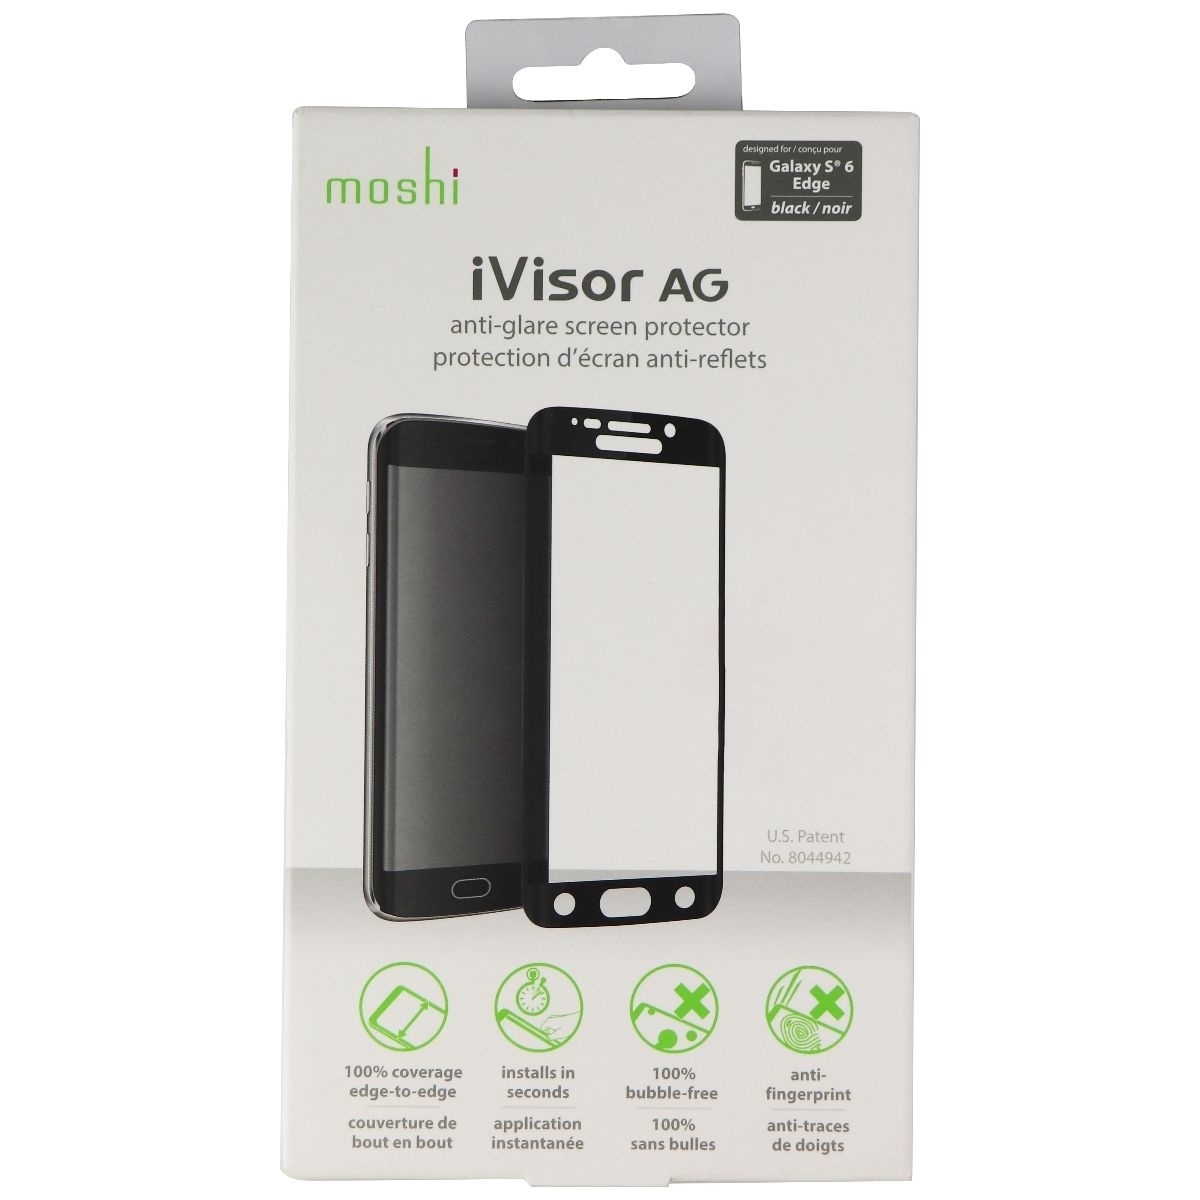 Moshi IVisor AG Anti-Glare Screen Protector For Galaxy S6 Edge - Clear/Black